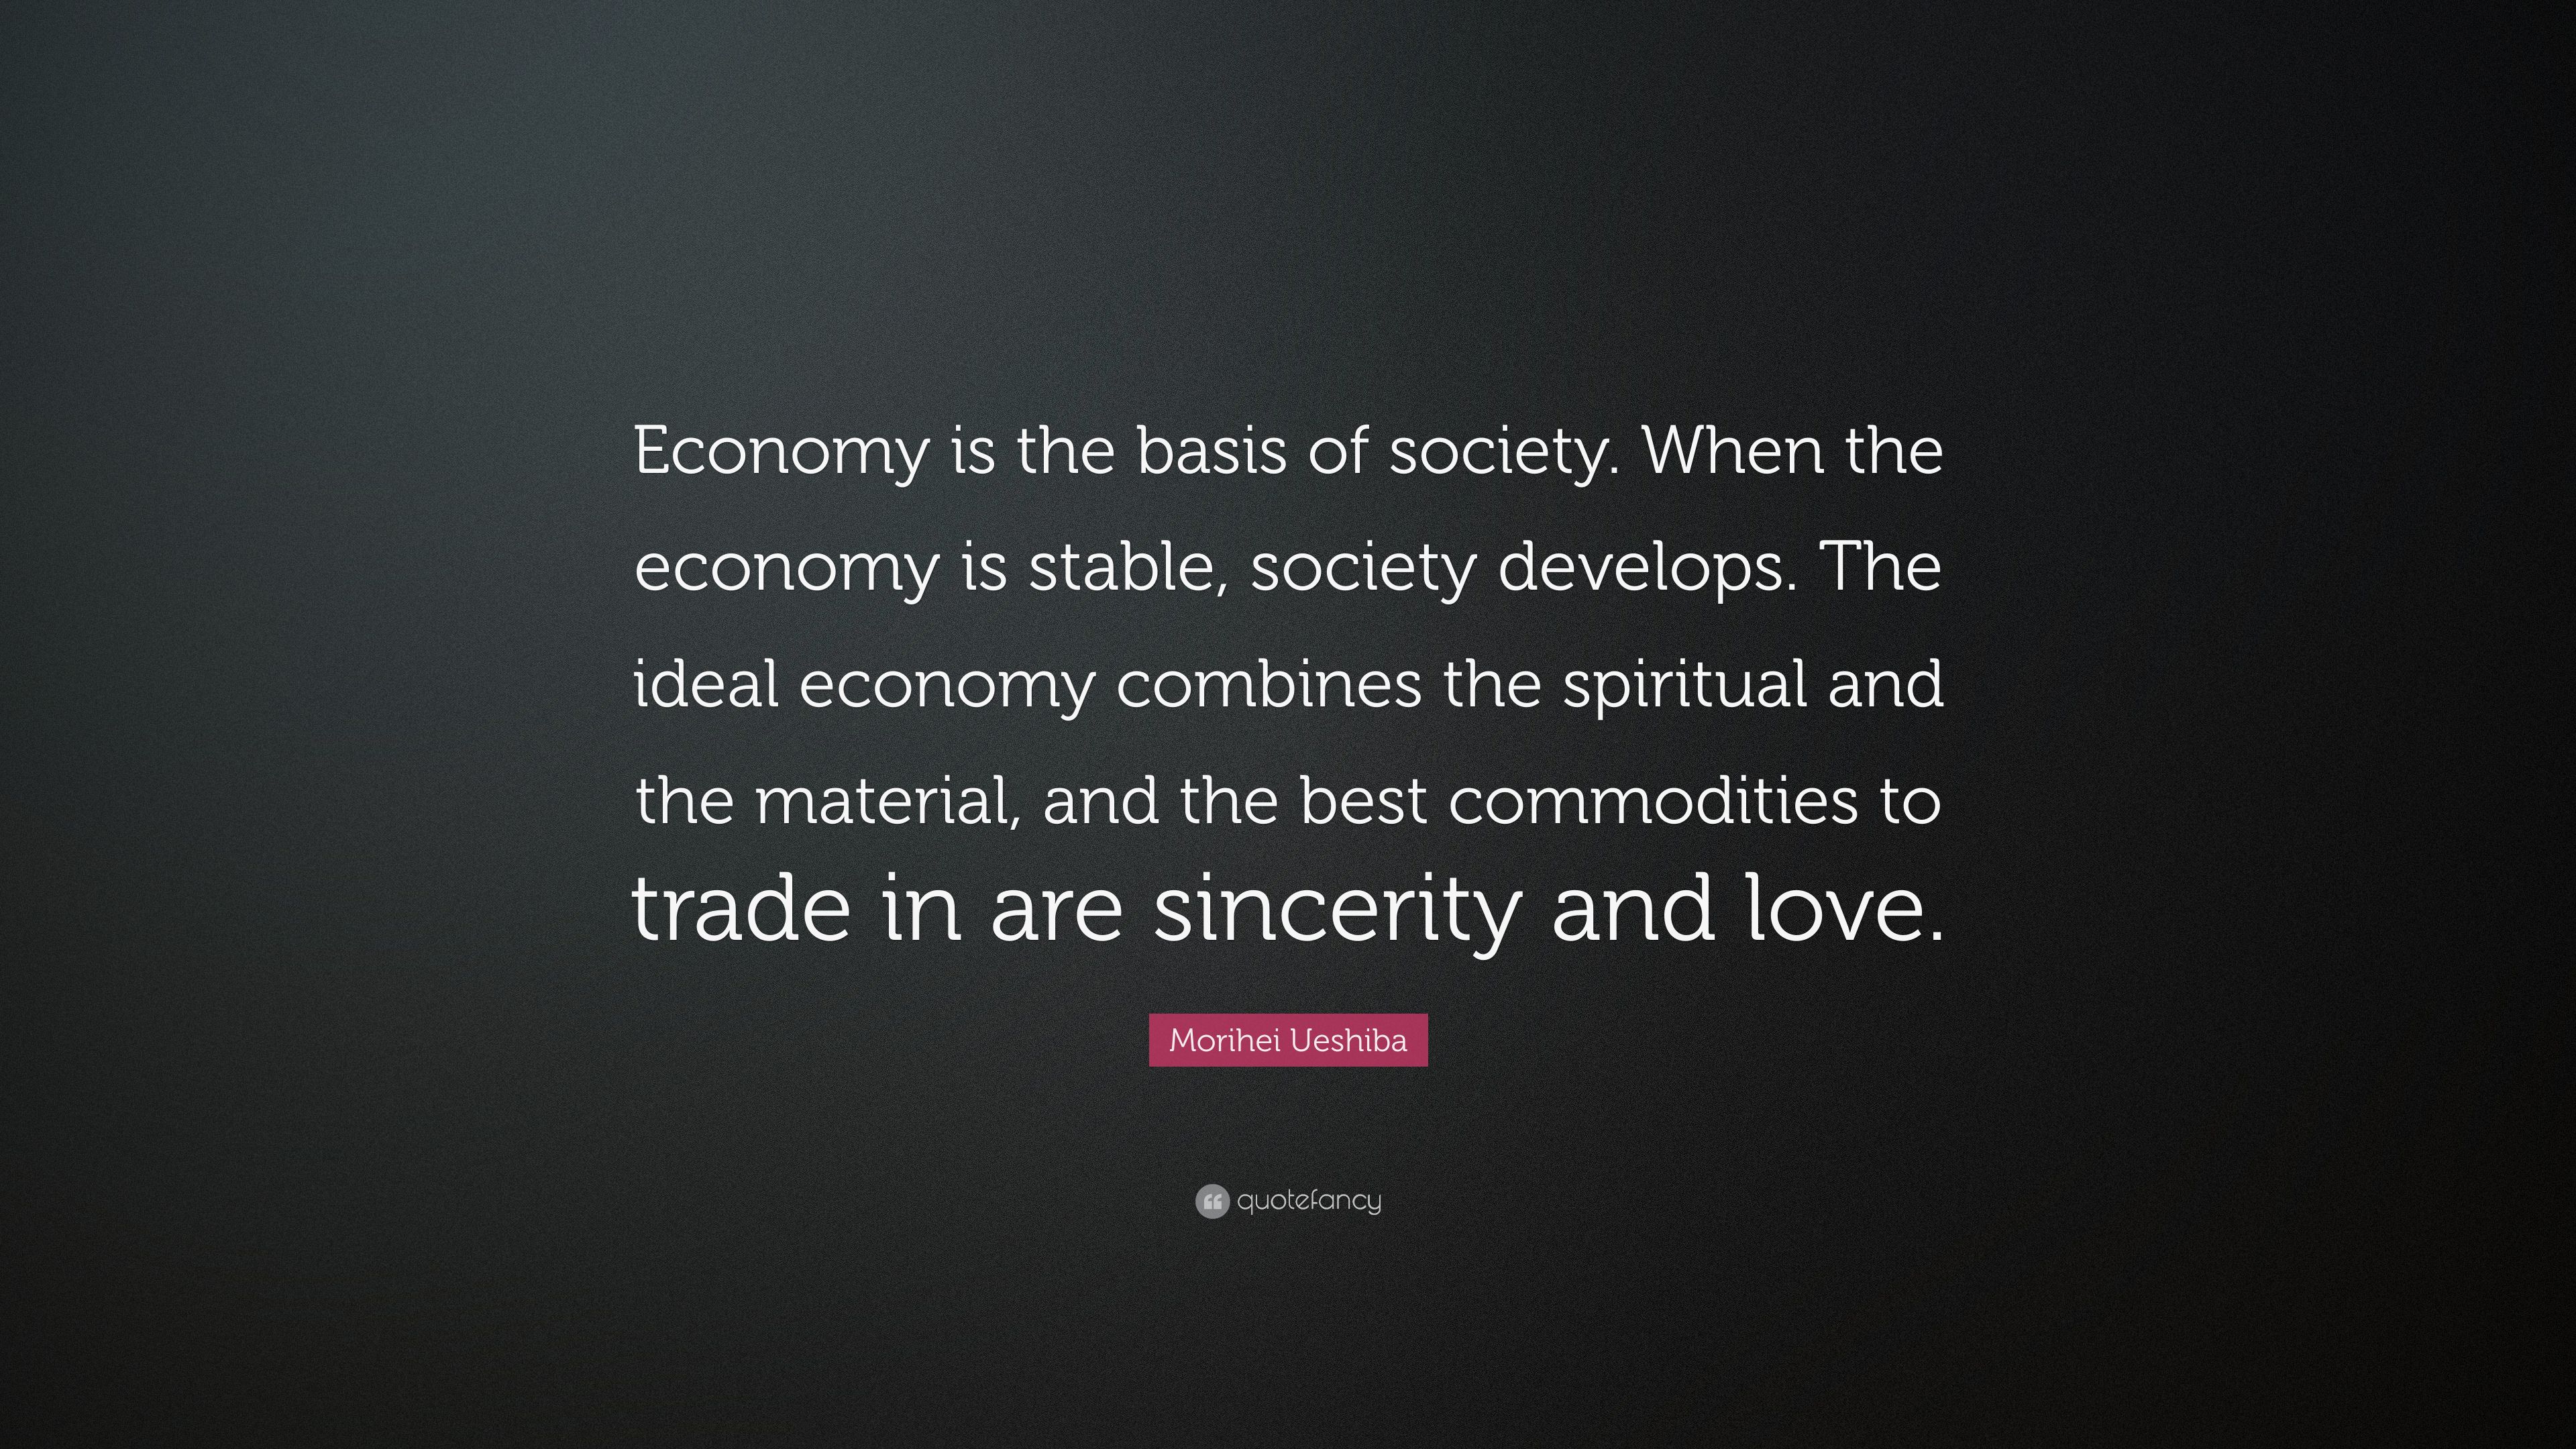 Morihei Ueshiba Quote: “Economy is the basis of society. When